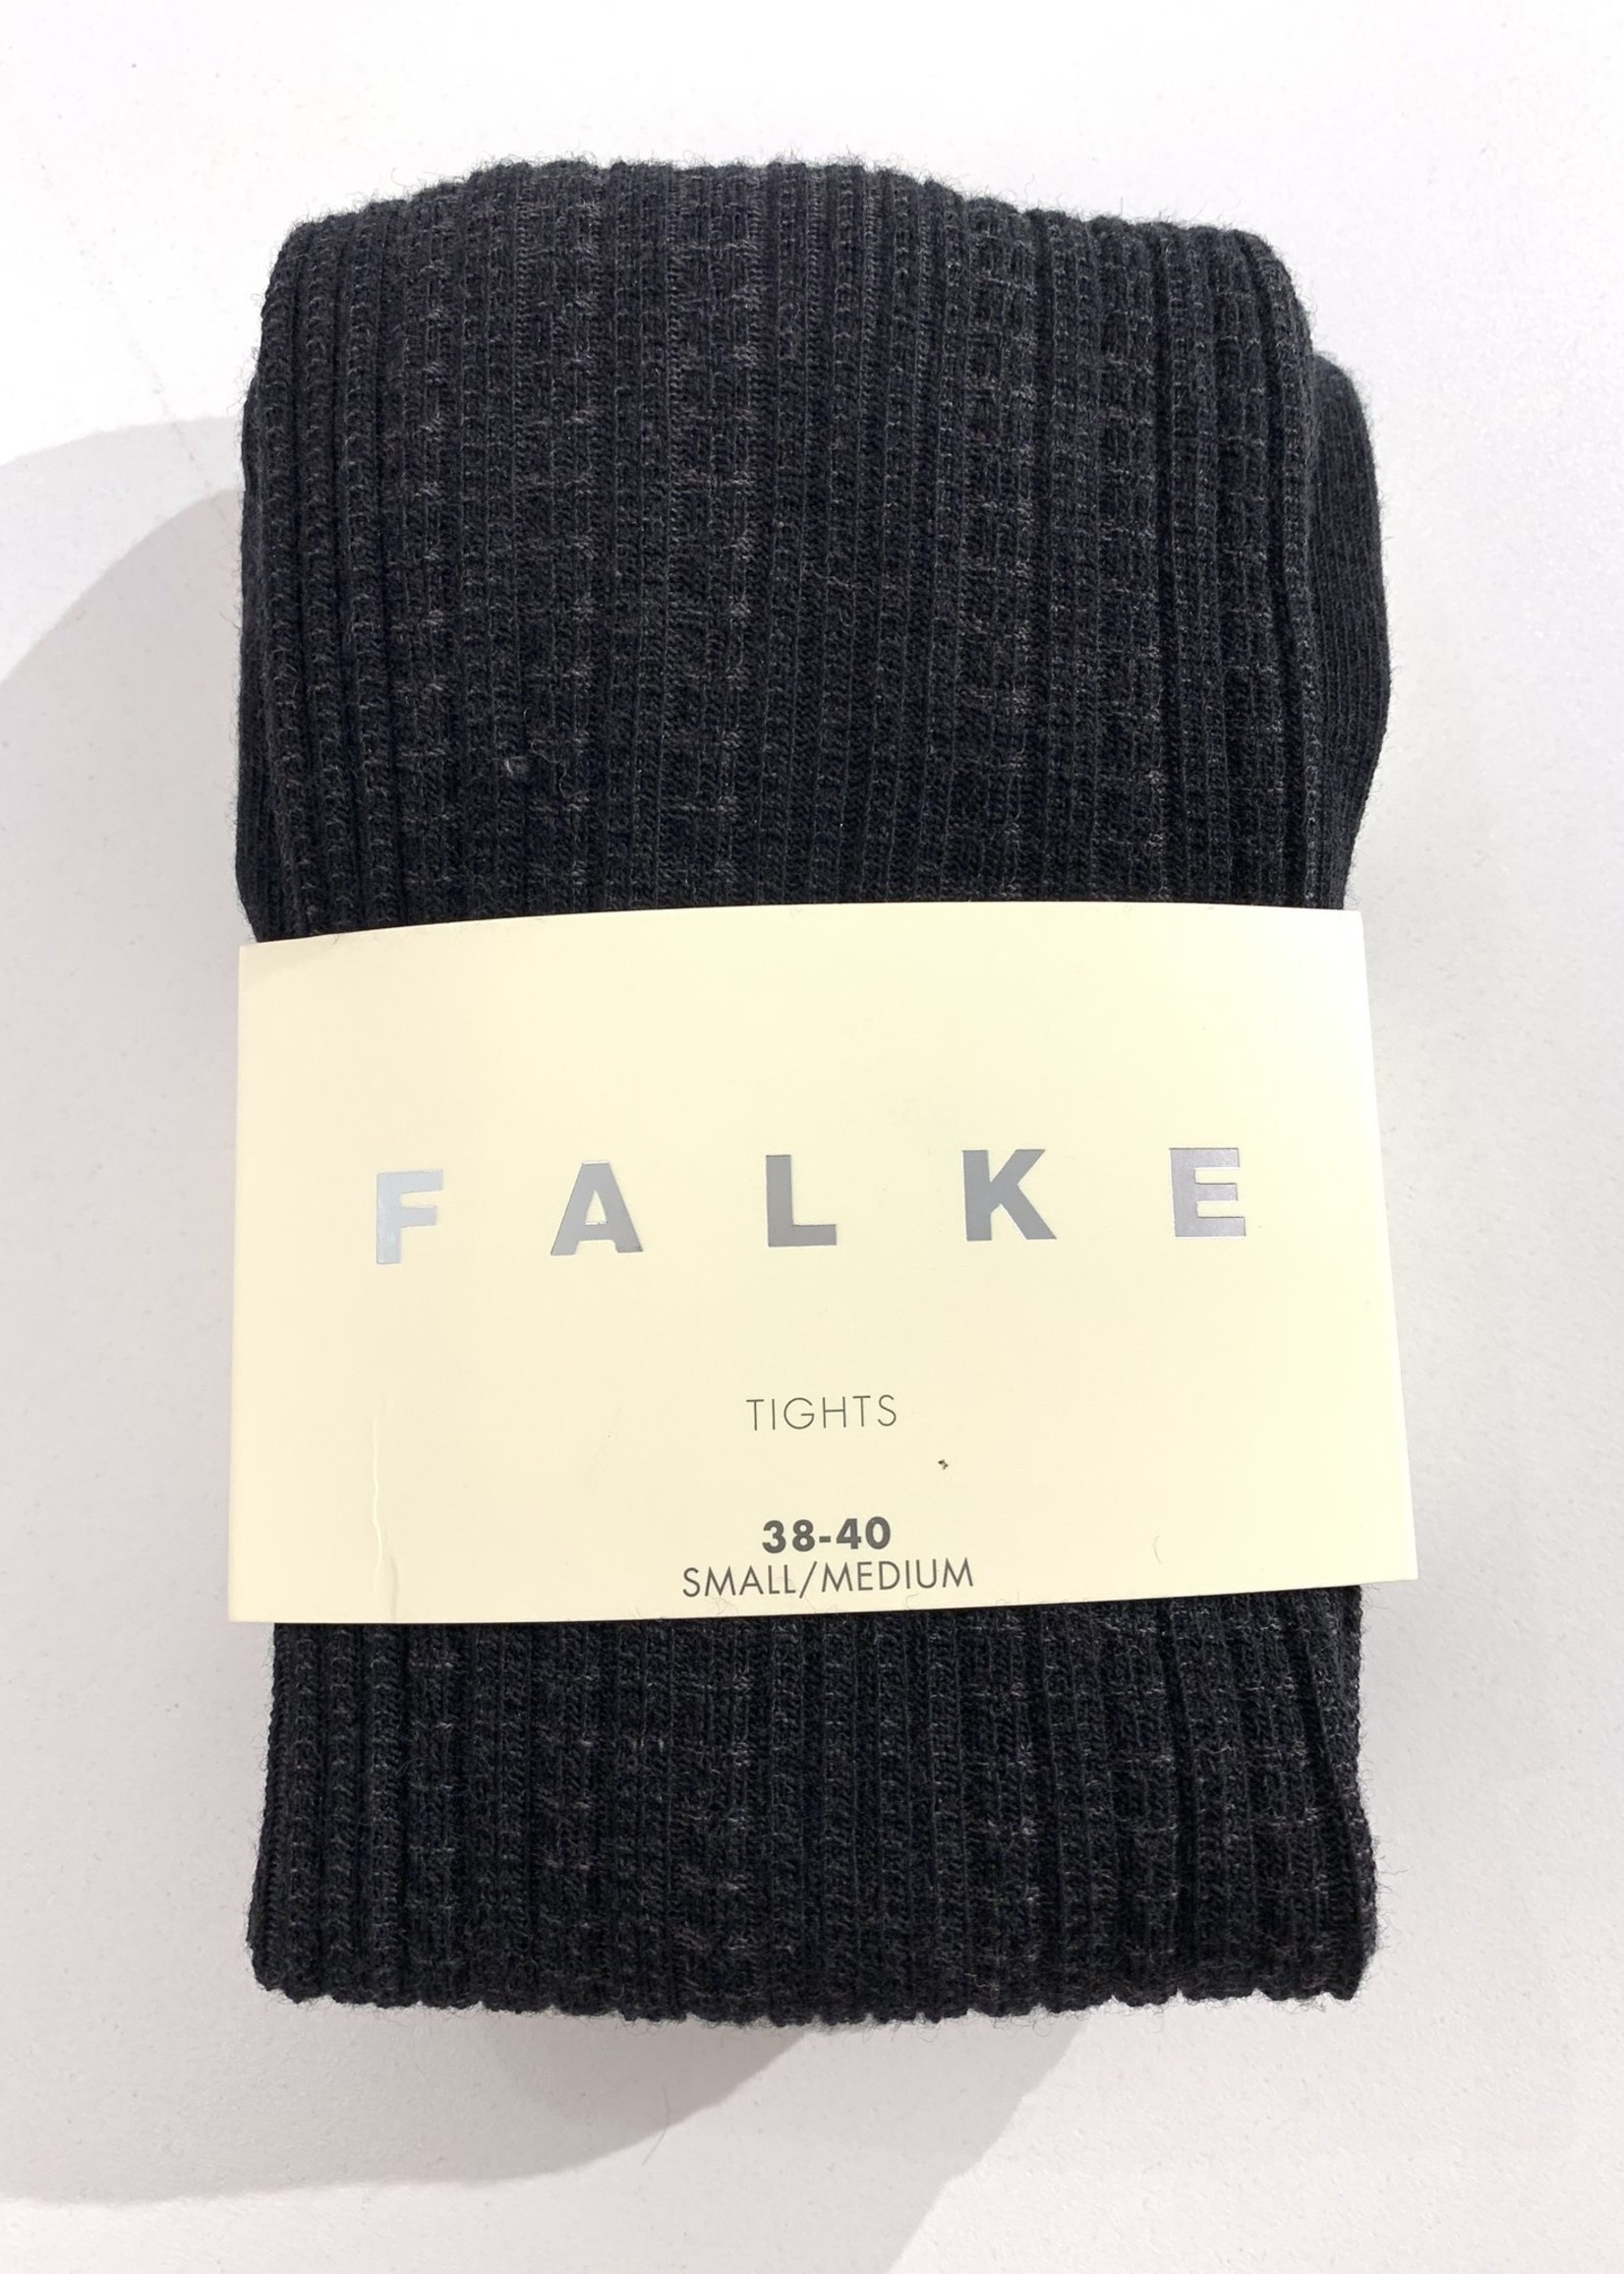 Falke Chain Stitch Tights